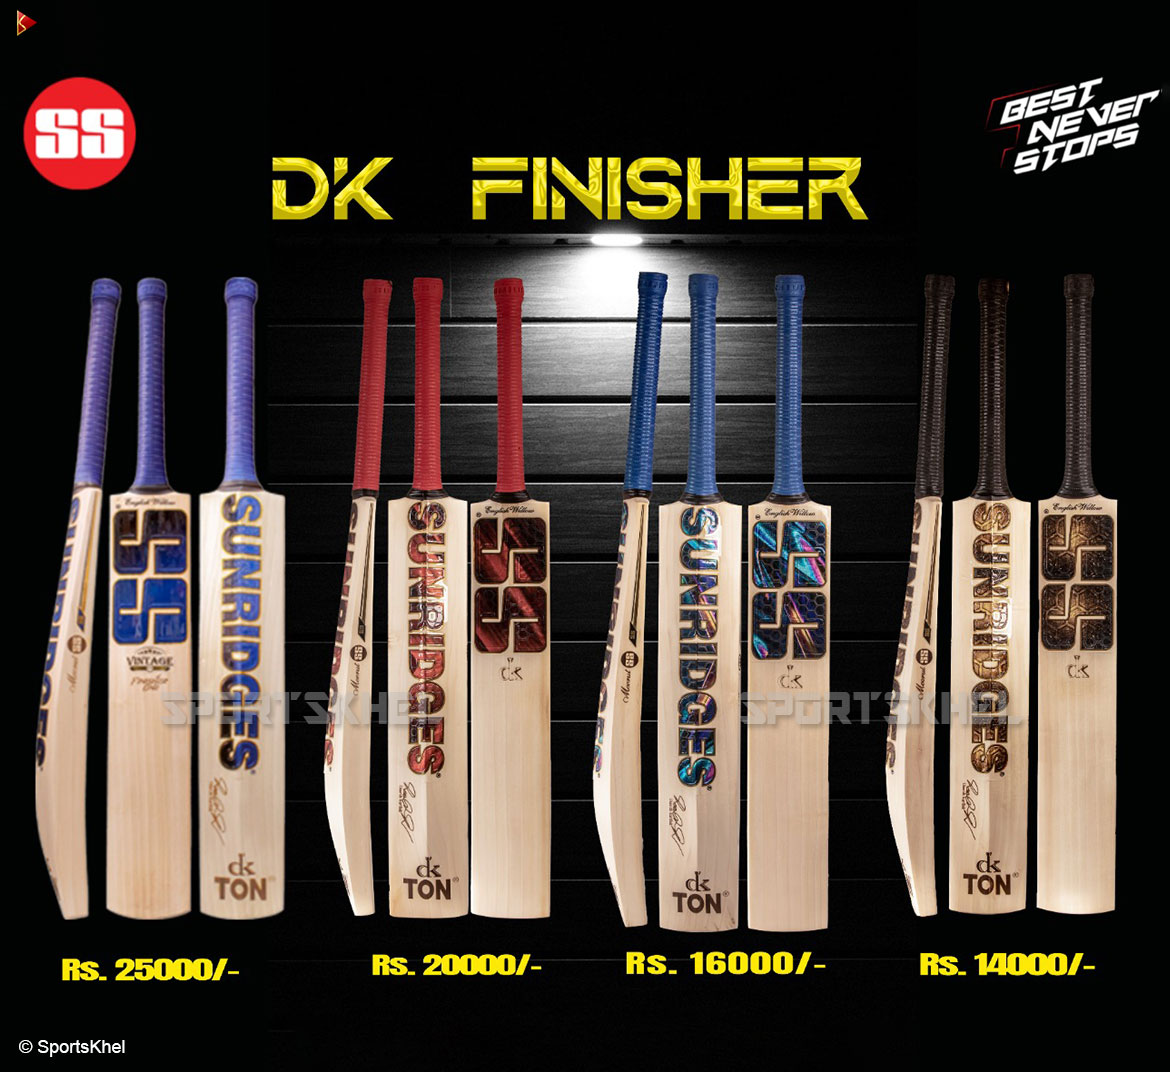 SS DK Finisher 4 Bat Features